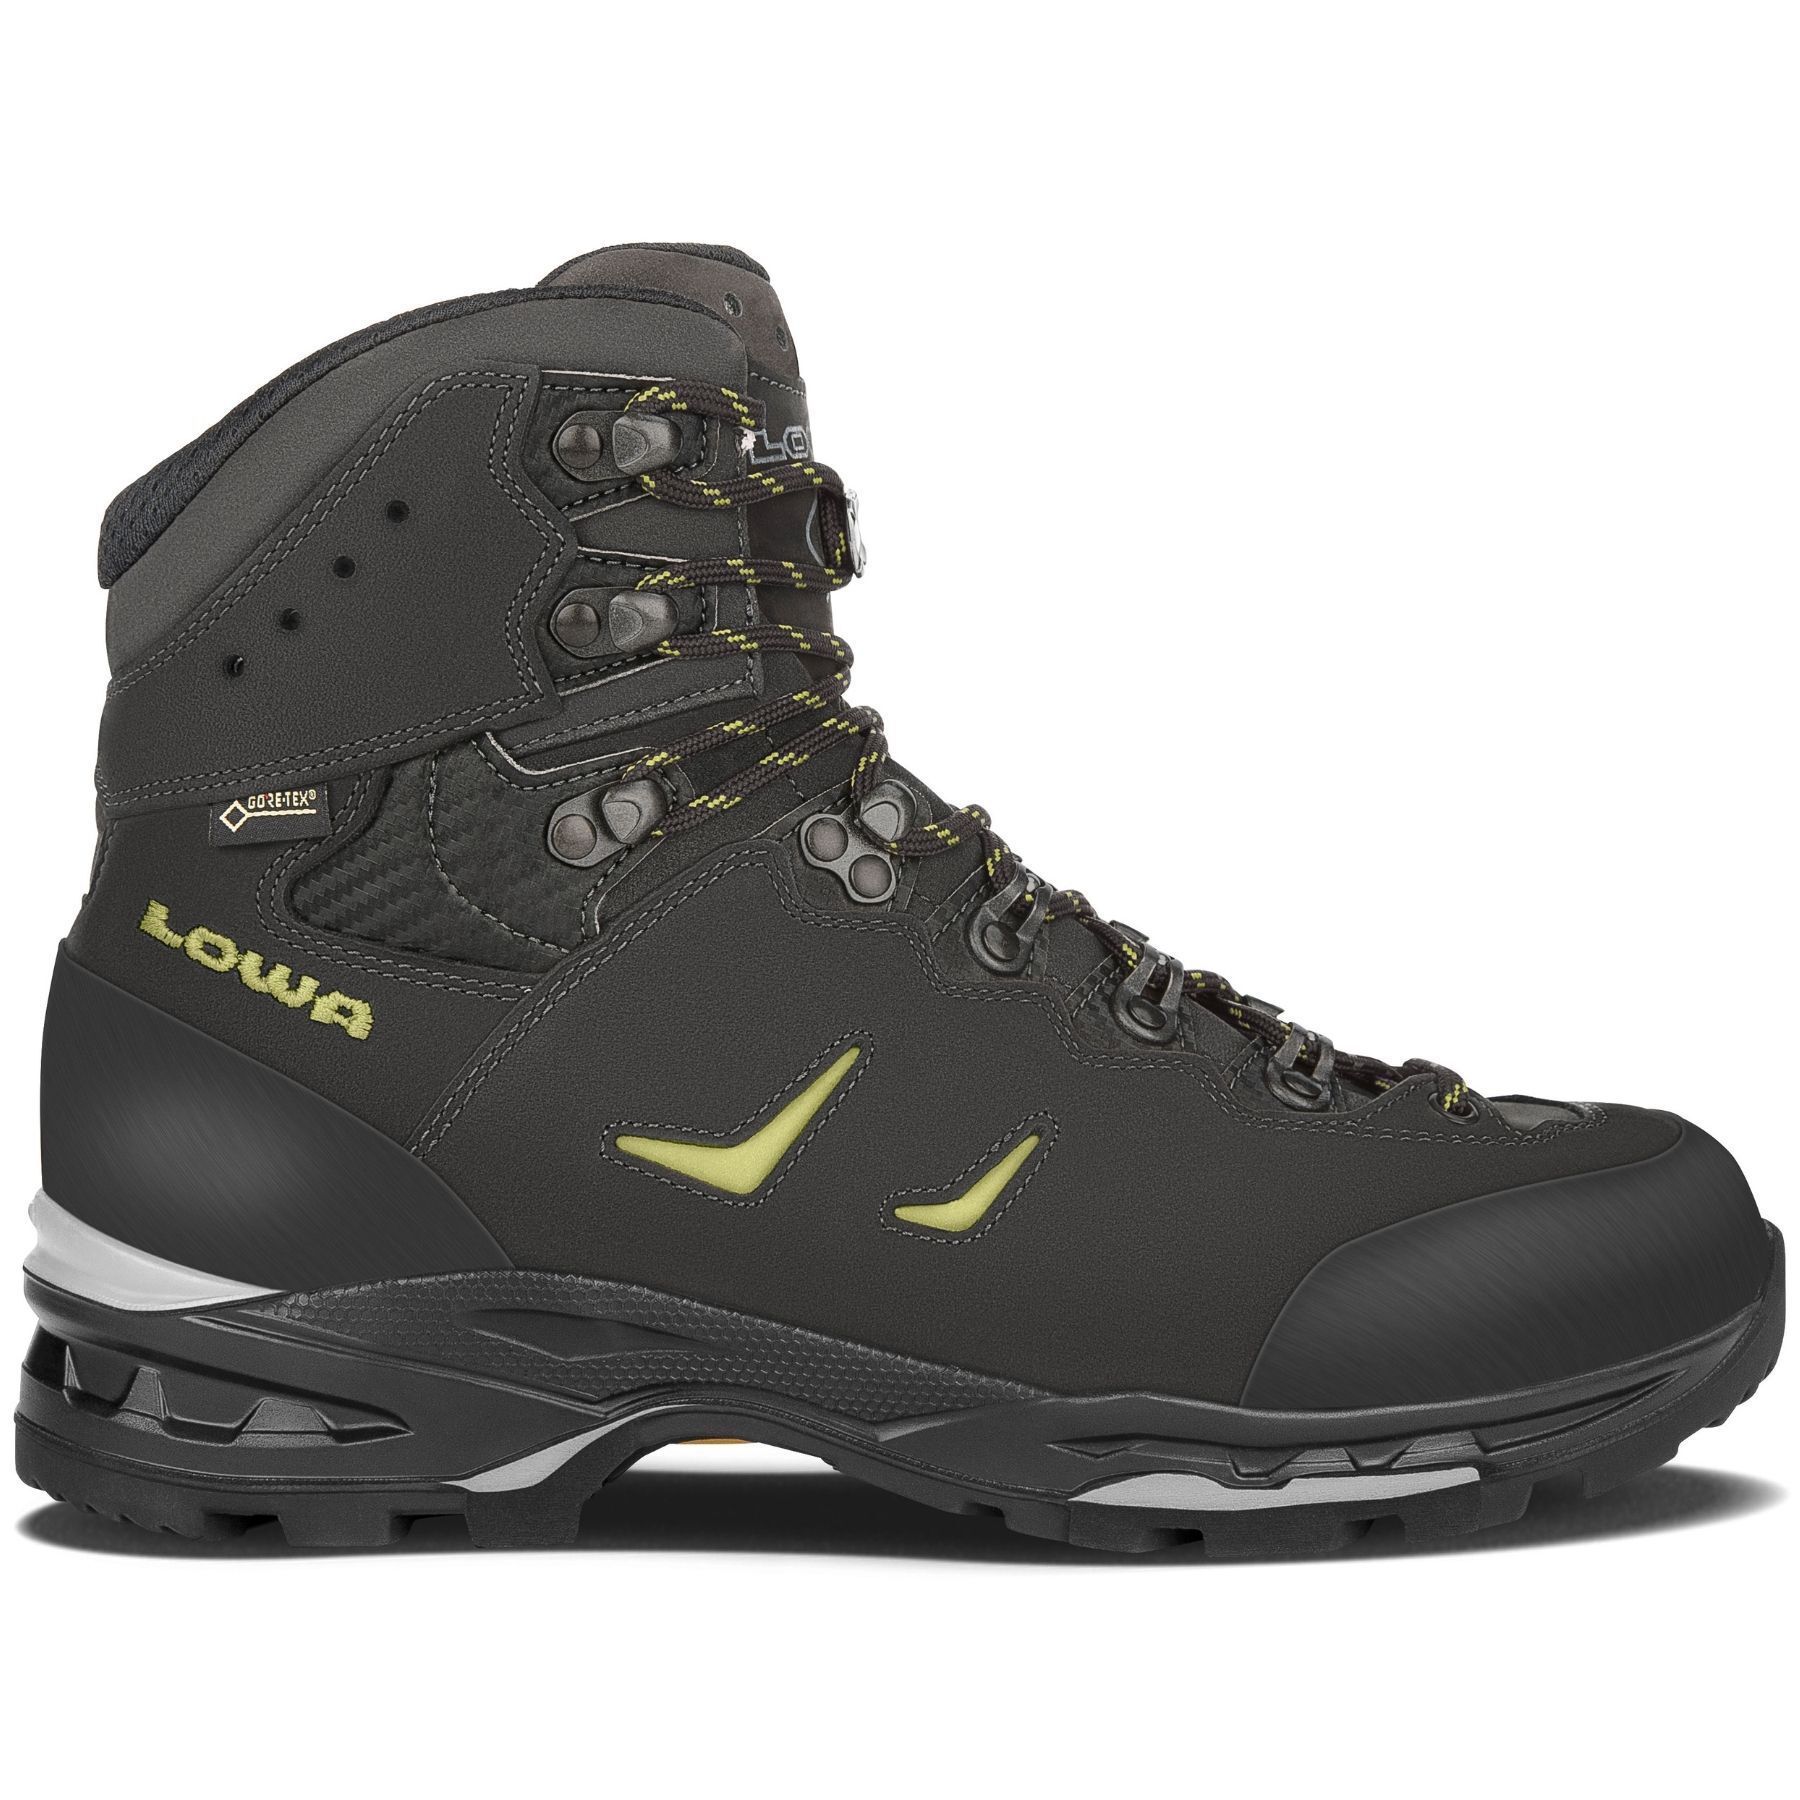 Lowa - Camino GTX® - Walking Boots - Men's